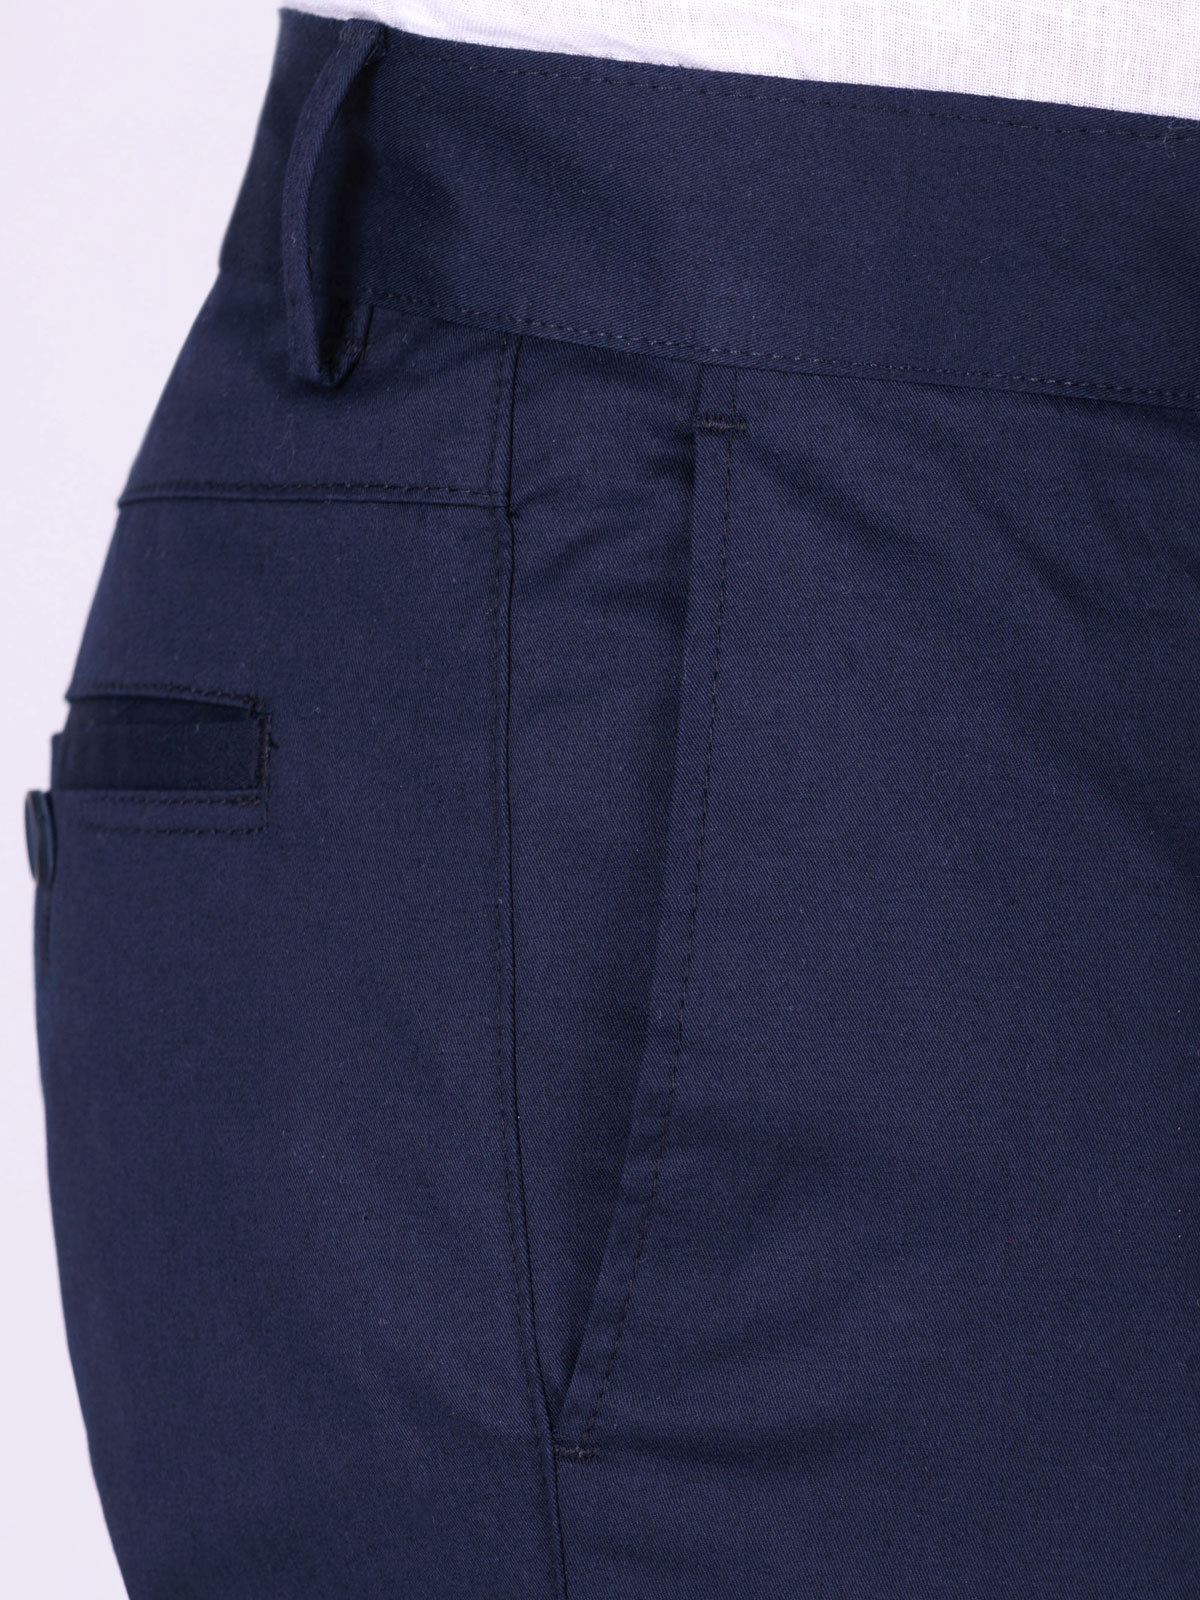 Sporty elegant trousers in blue - 60287 € 53.43 img2